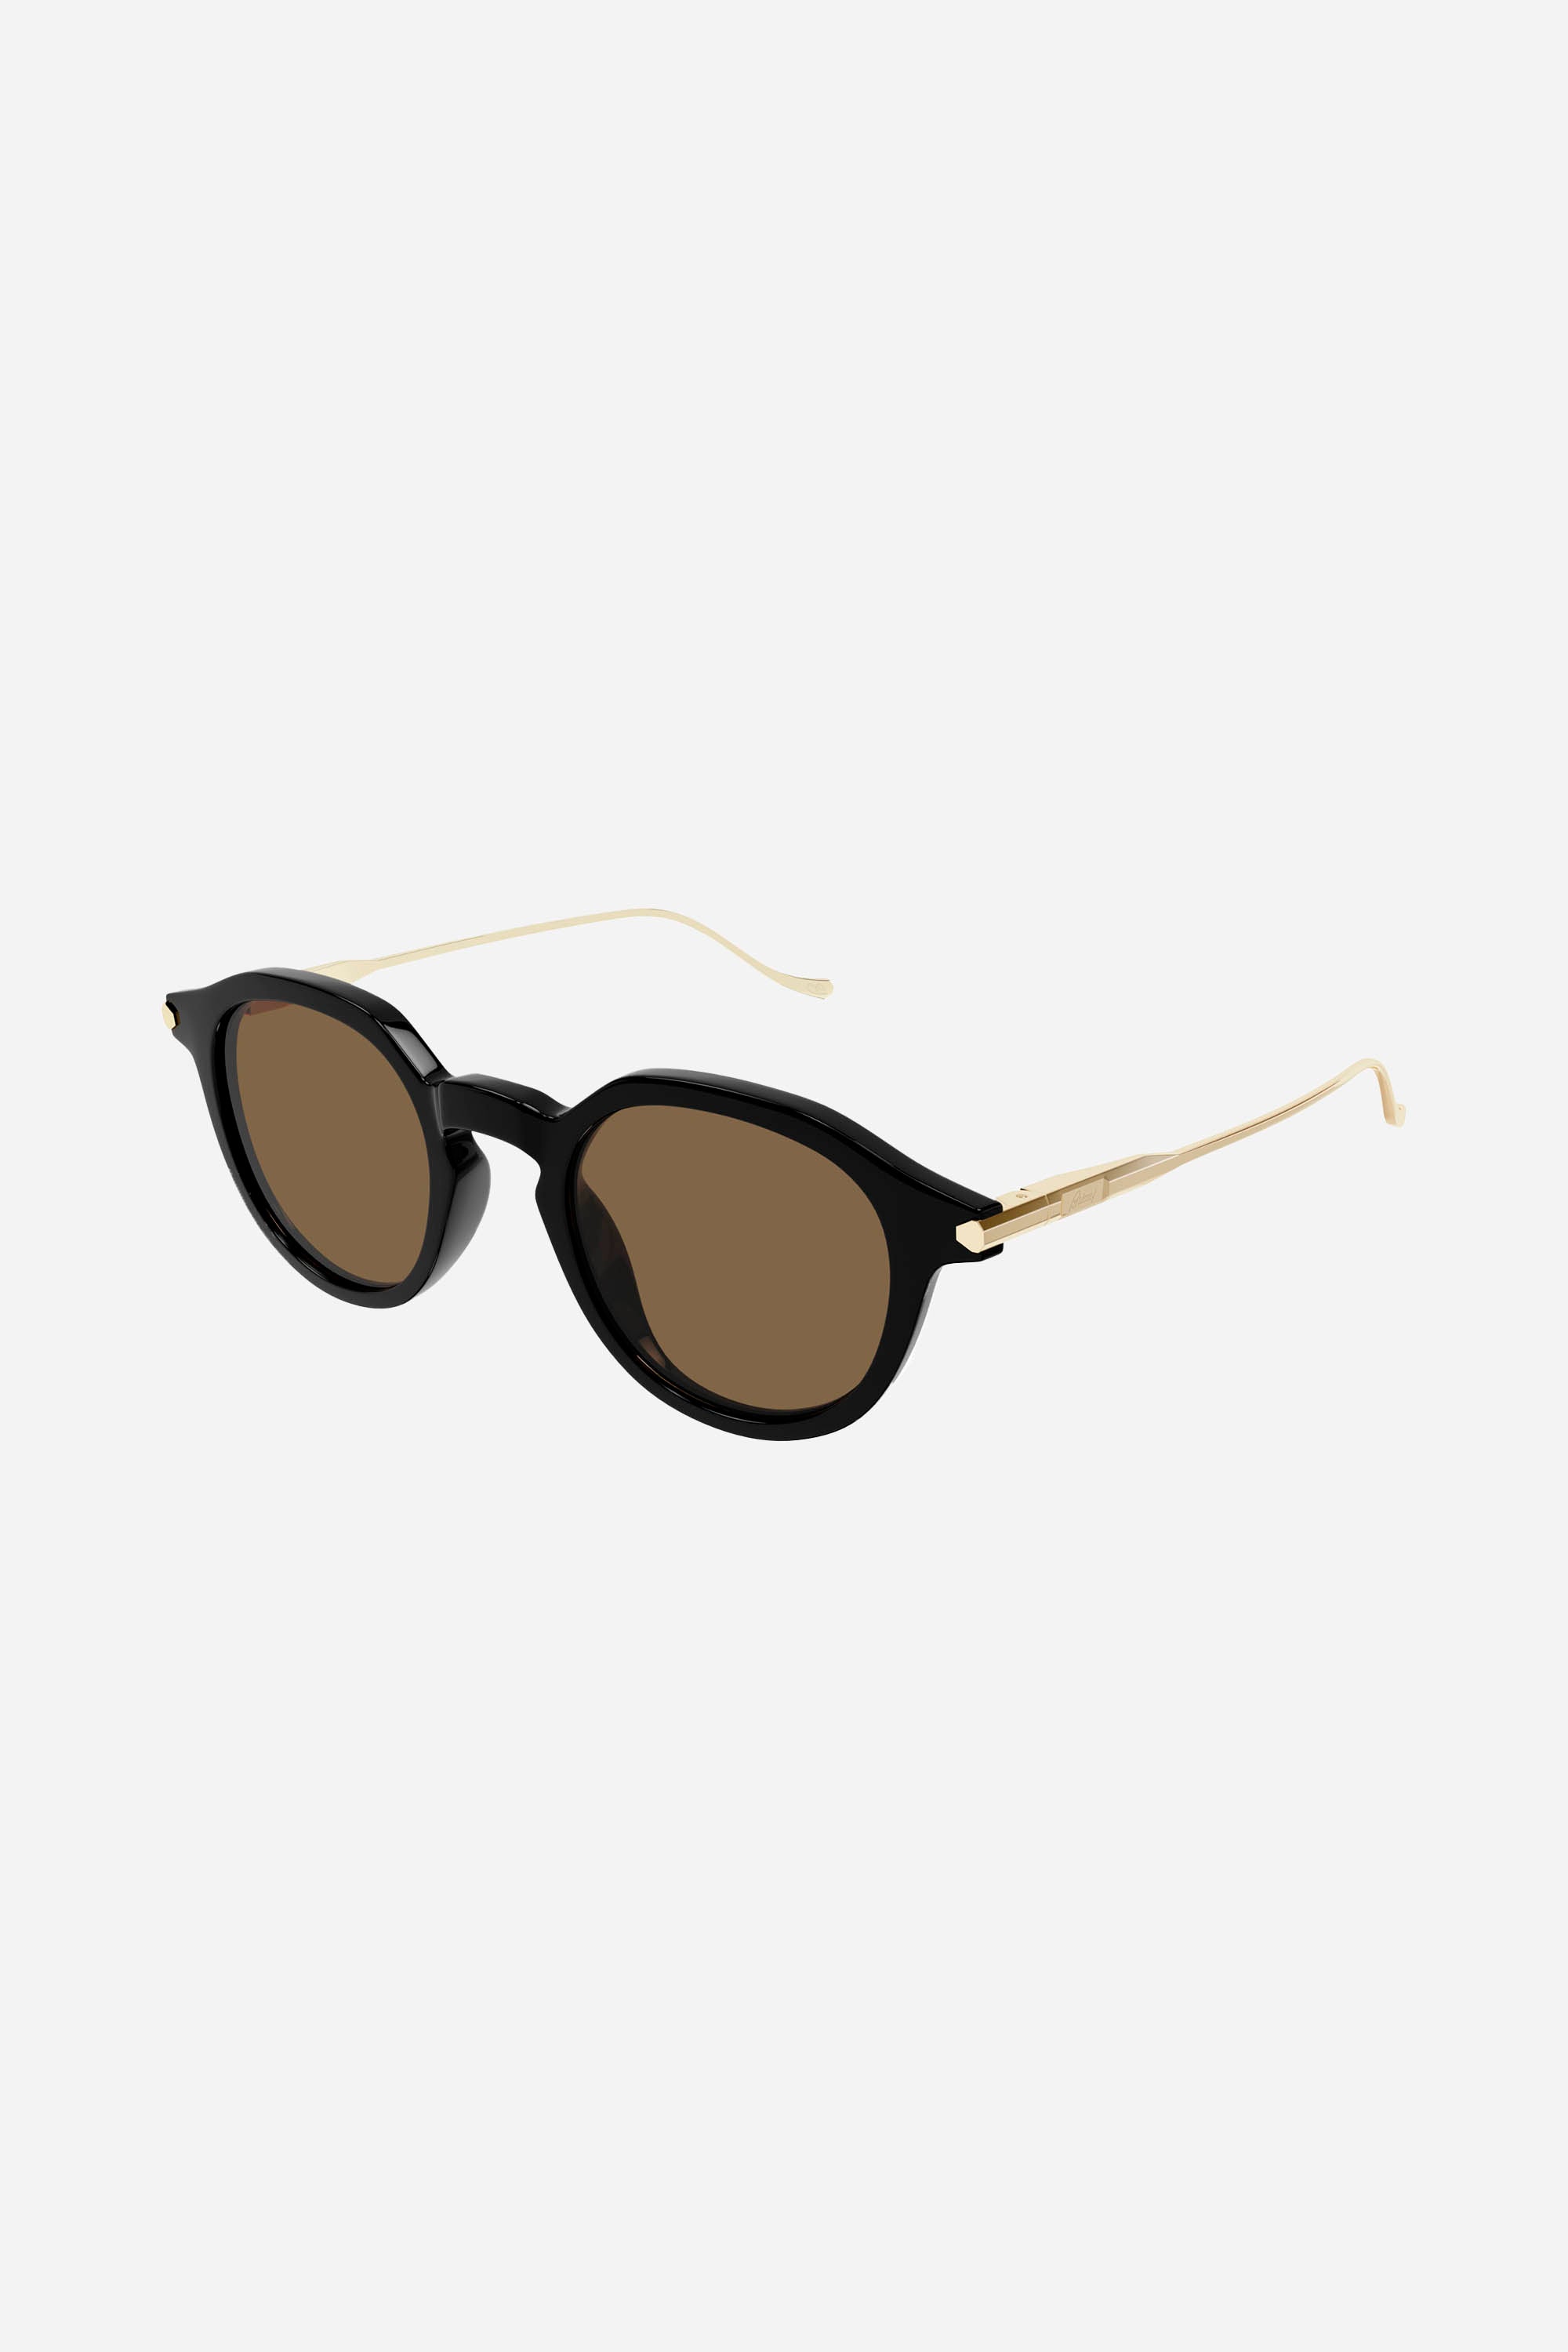 Brioni round black sunglasses - Eyewear Club